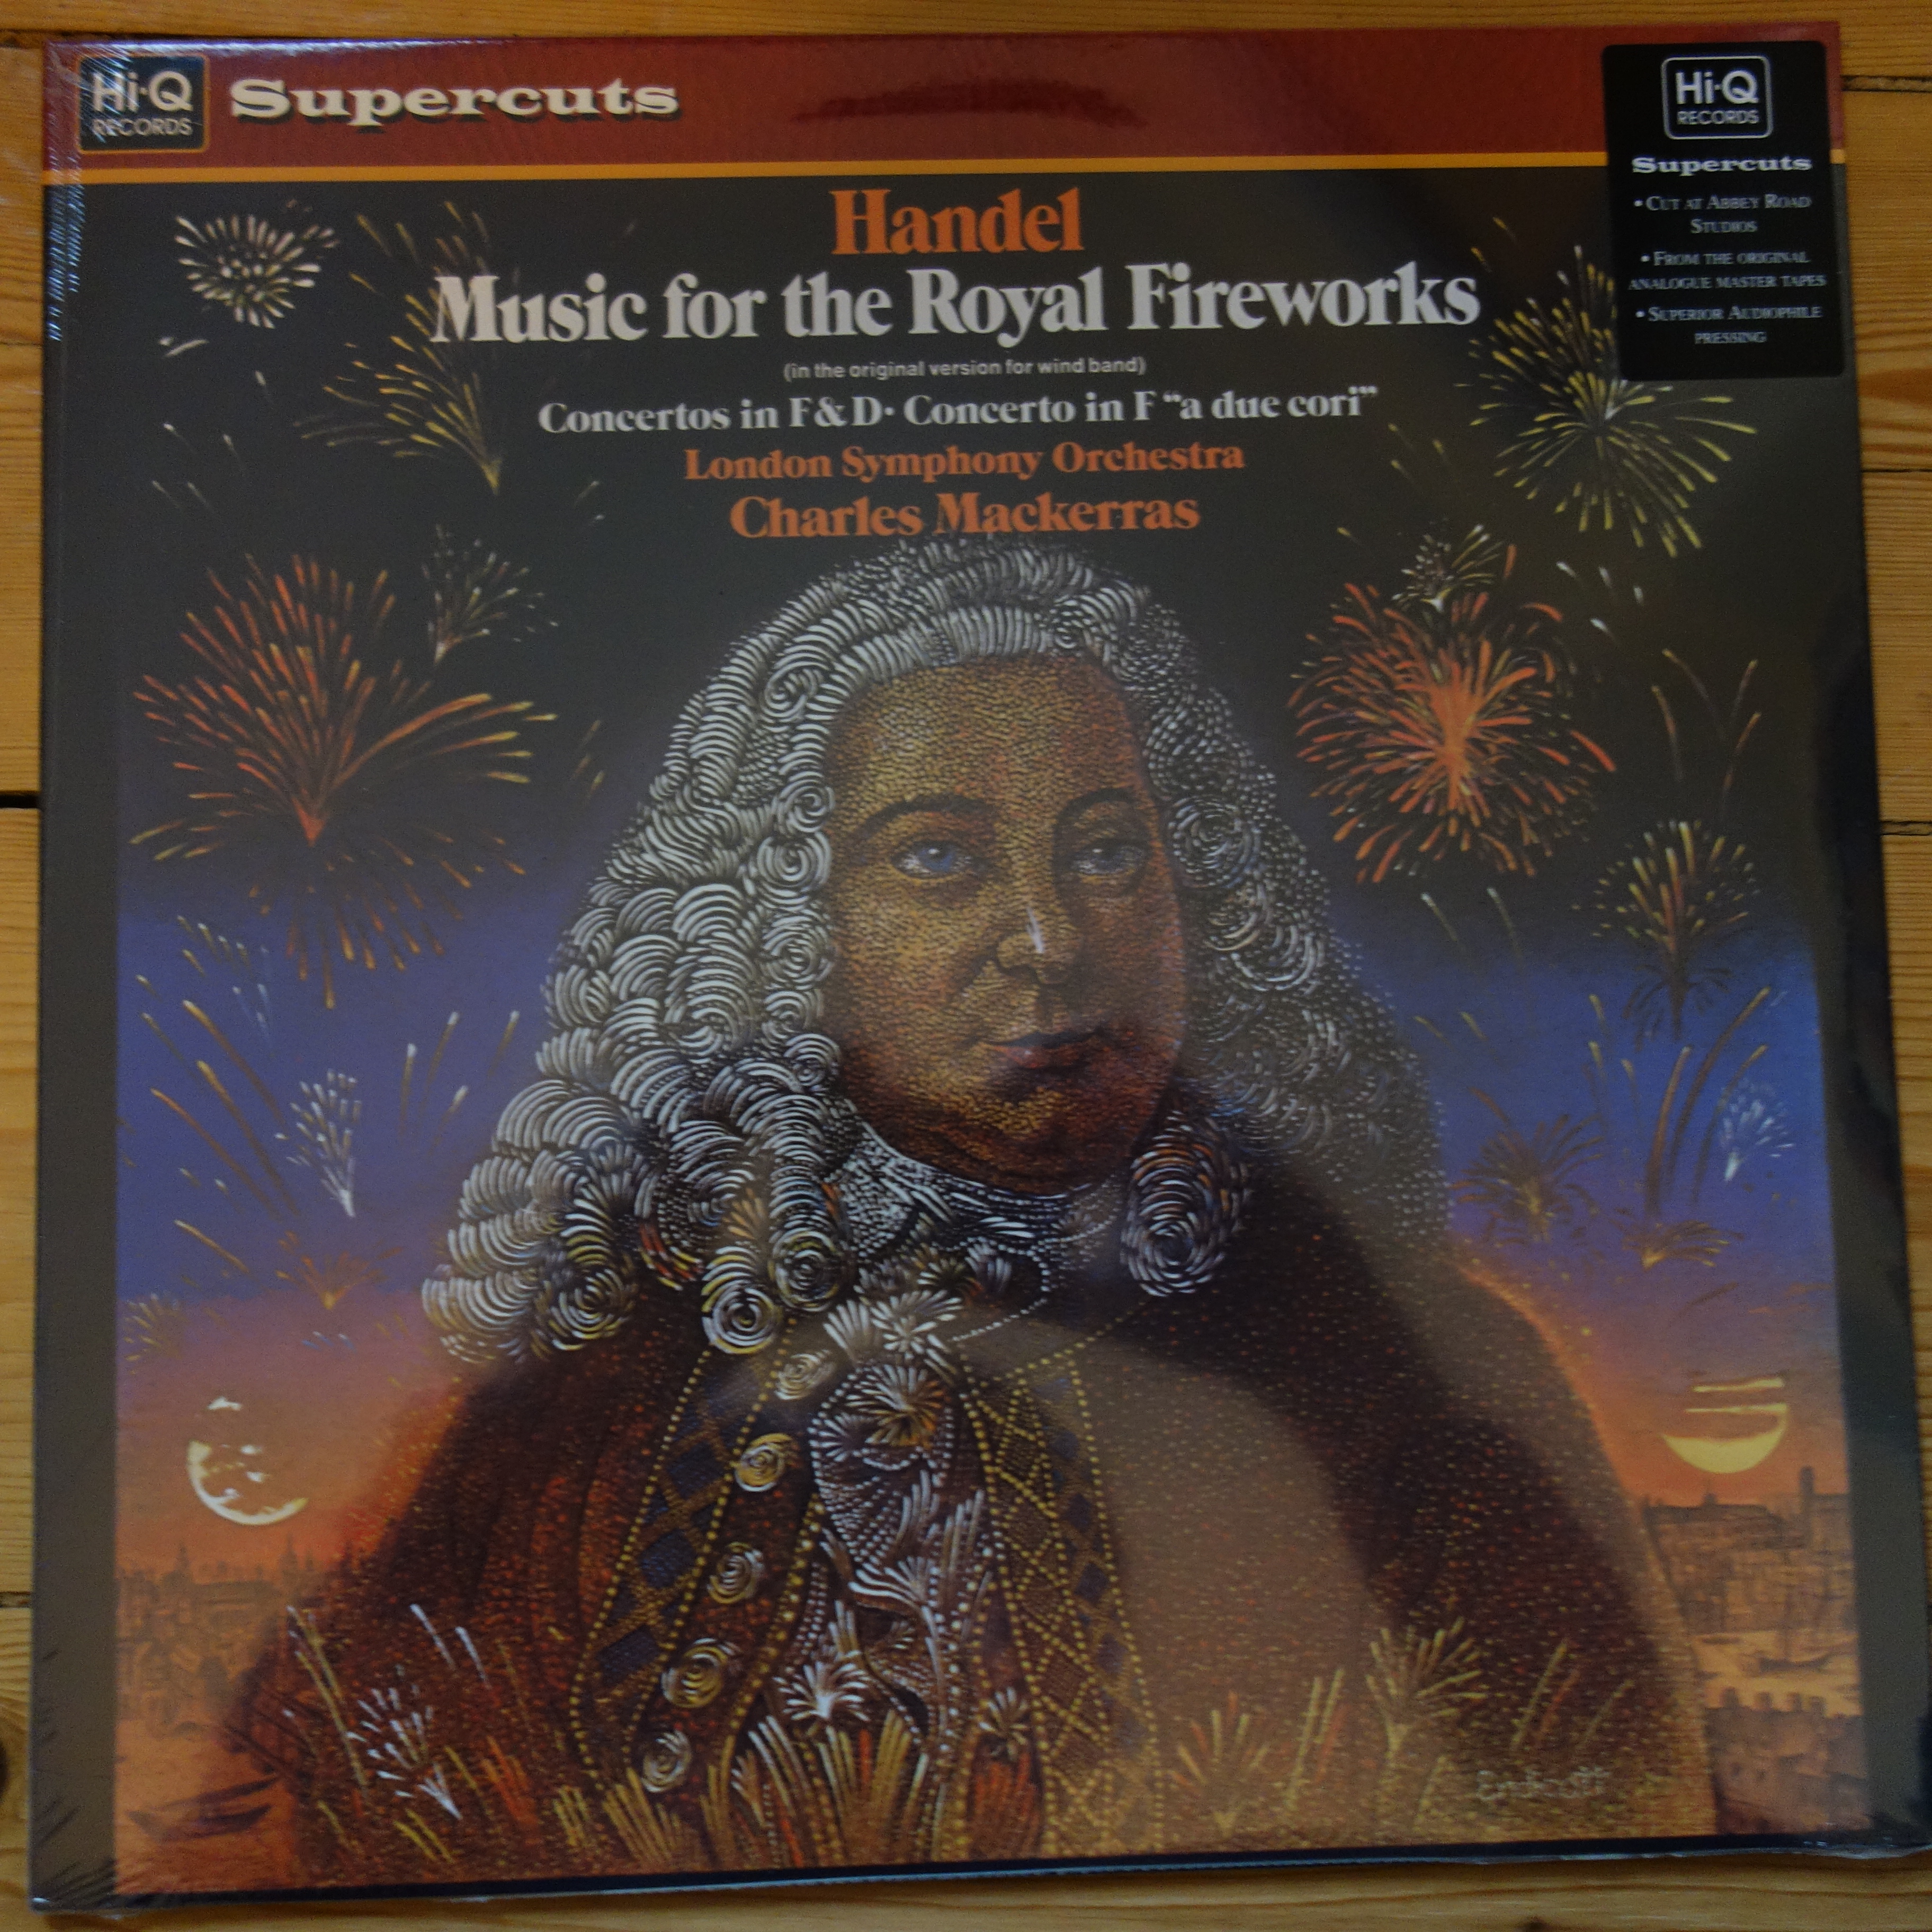 HIQLP 019 Handel Music For The Royal Fireworks